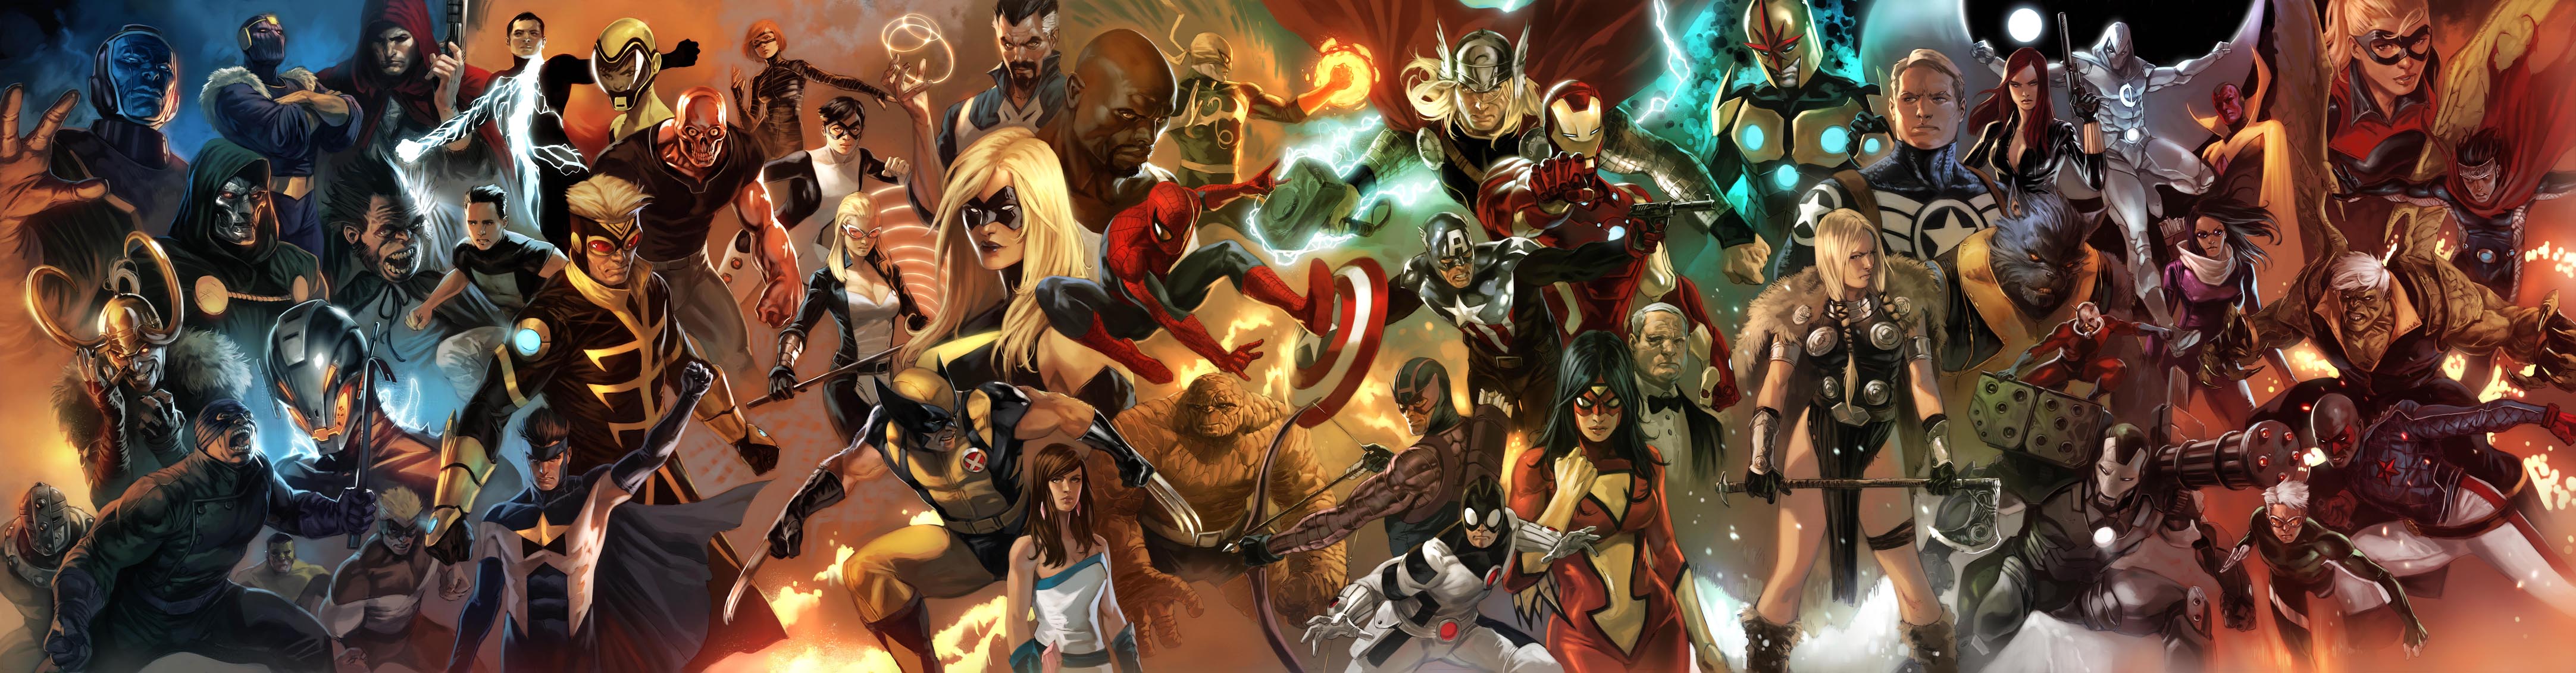 Marvel Super Heroes Marvel Comics Wolverine Spider Man Dr Strange Hulk Thor Iron Fist Captain Americ 4329x1131